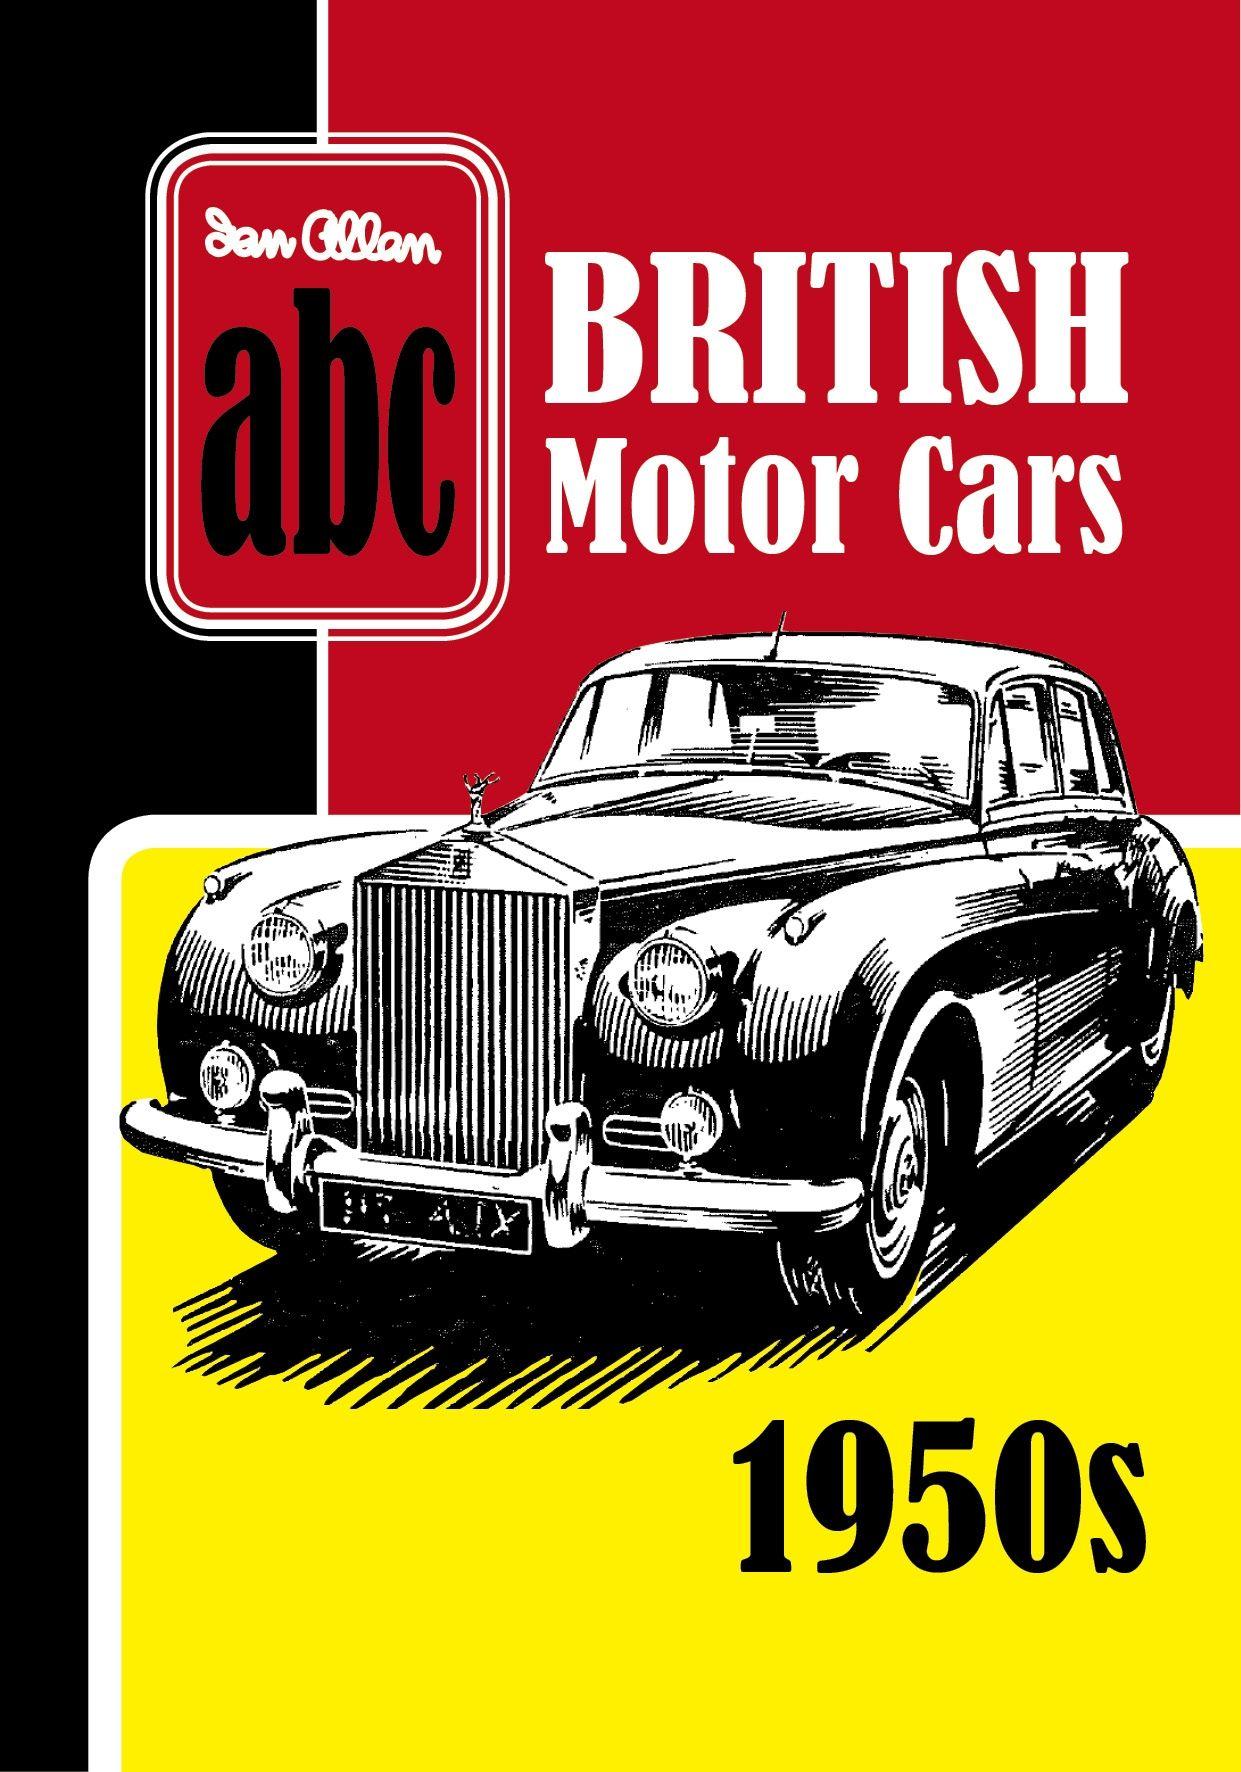 British Motor Car Logo - abc British Motor Cars 1950s